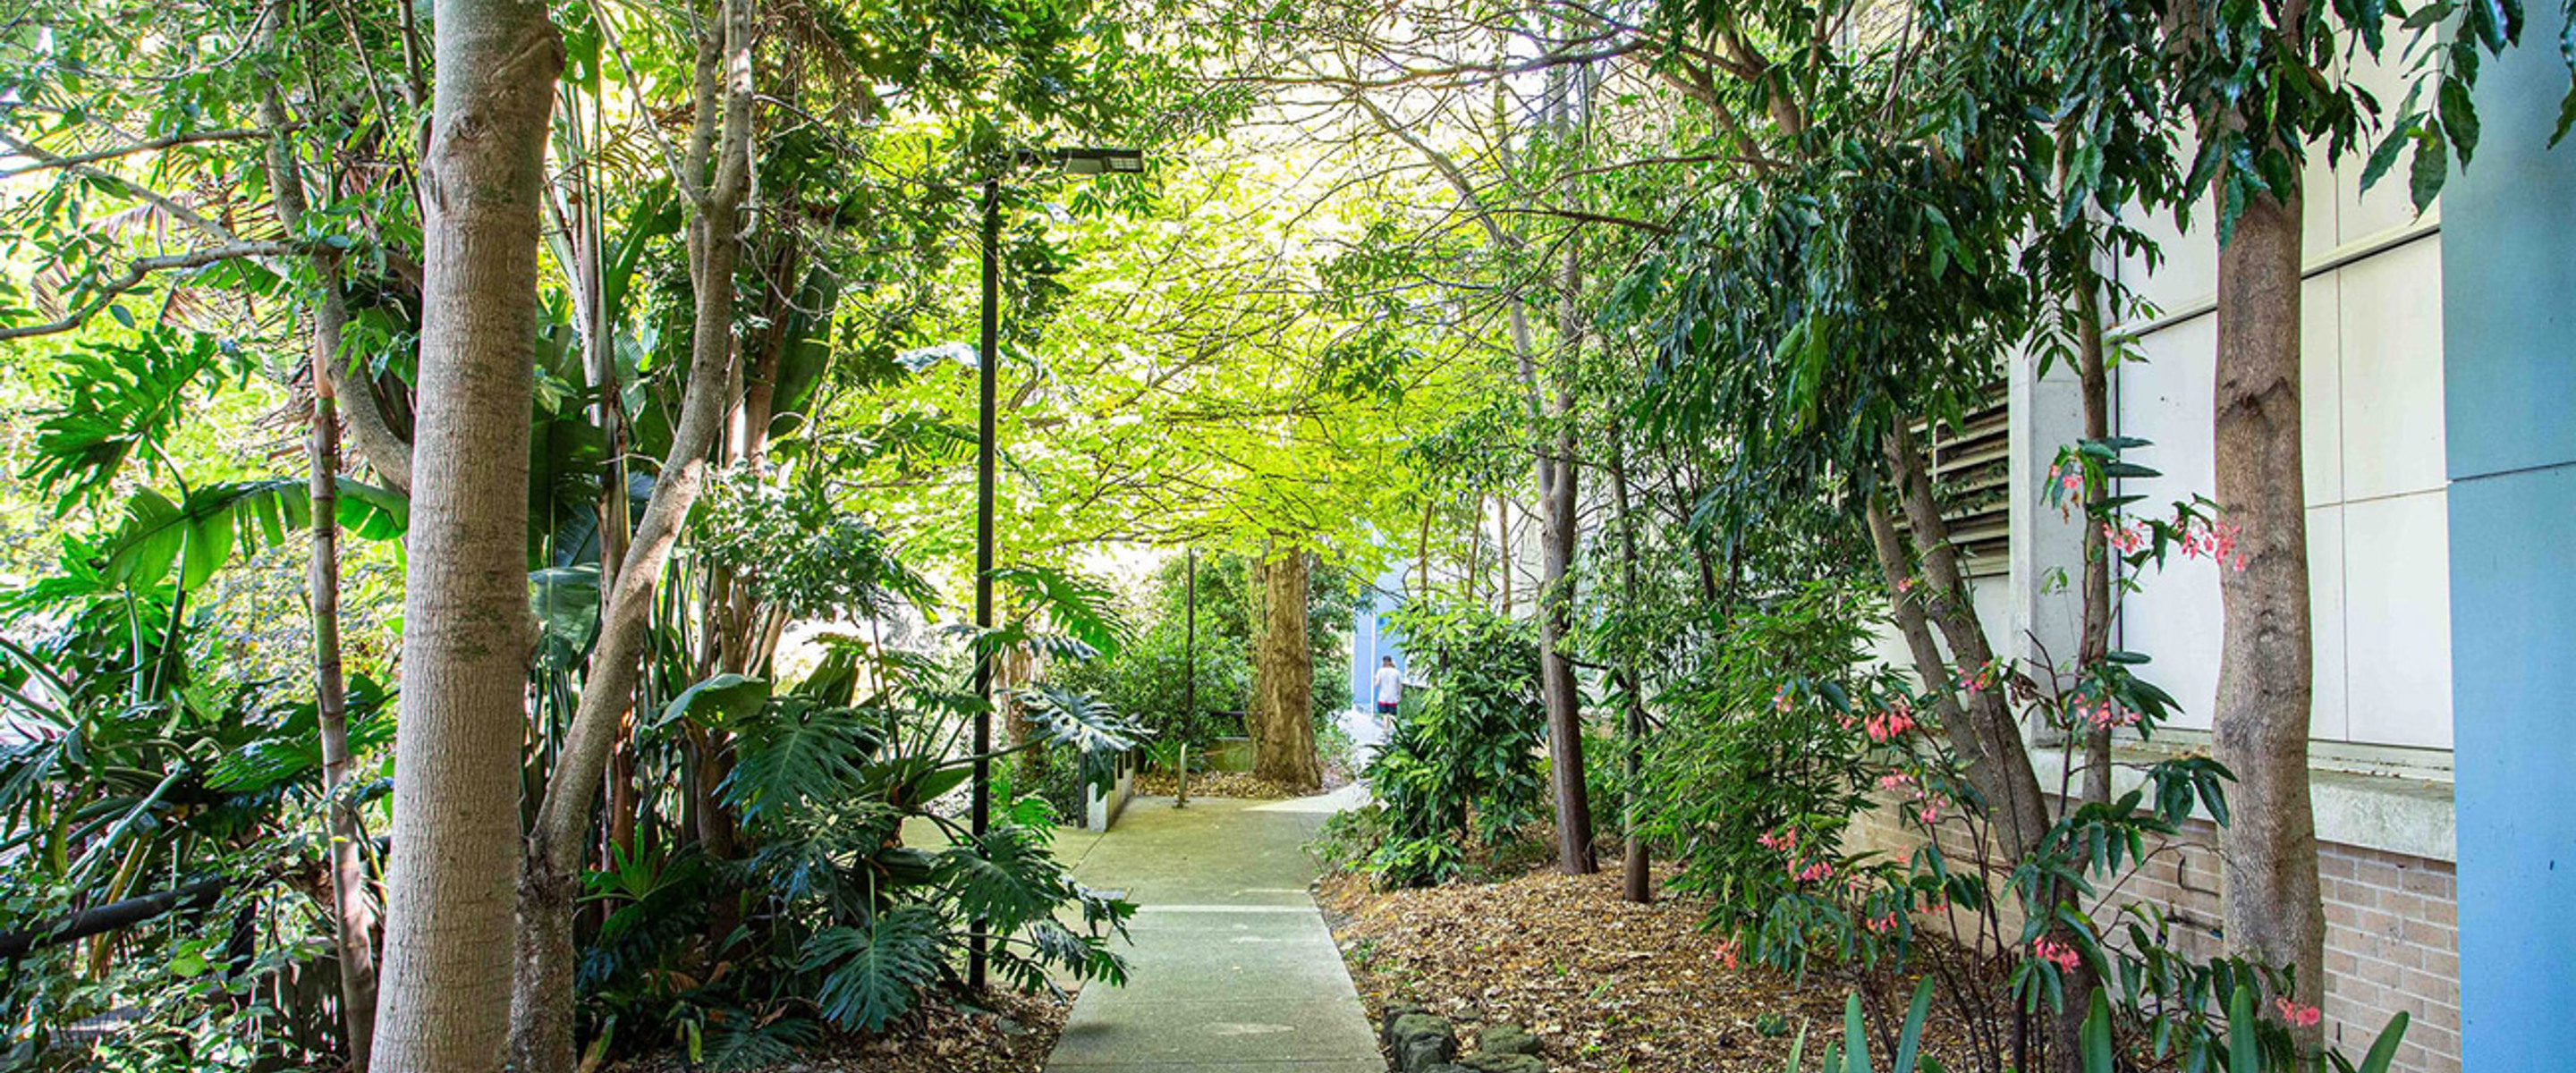 Greensborough campus garden path